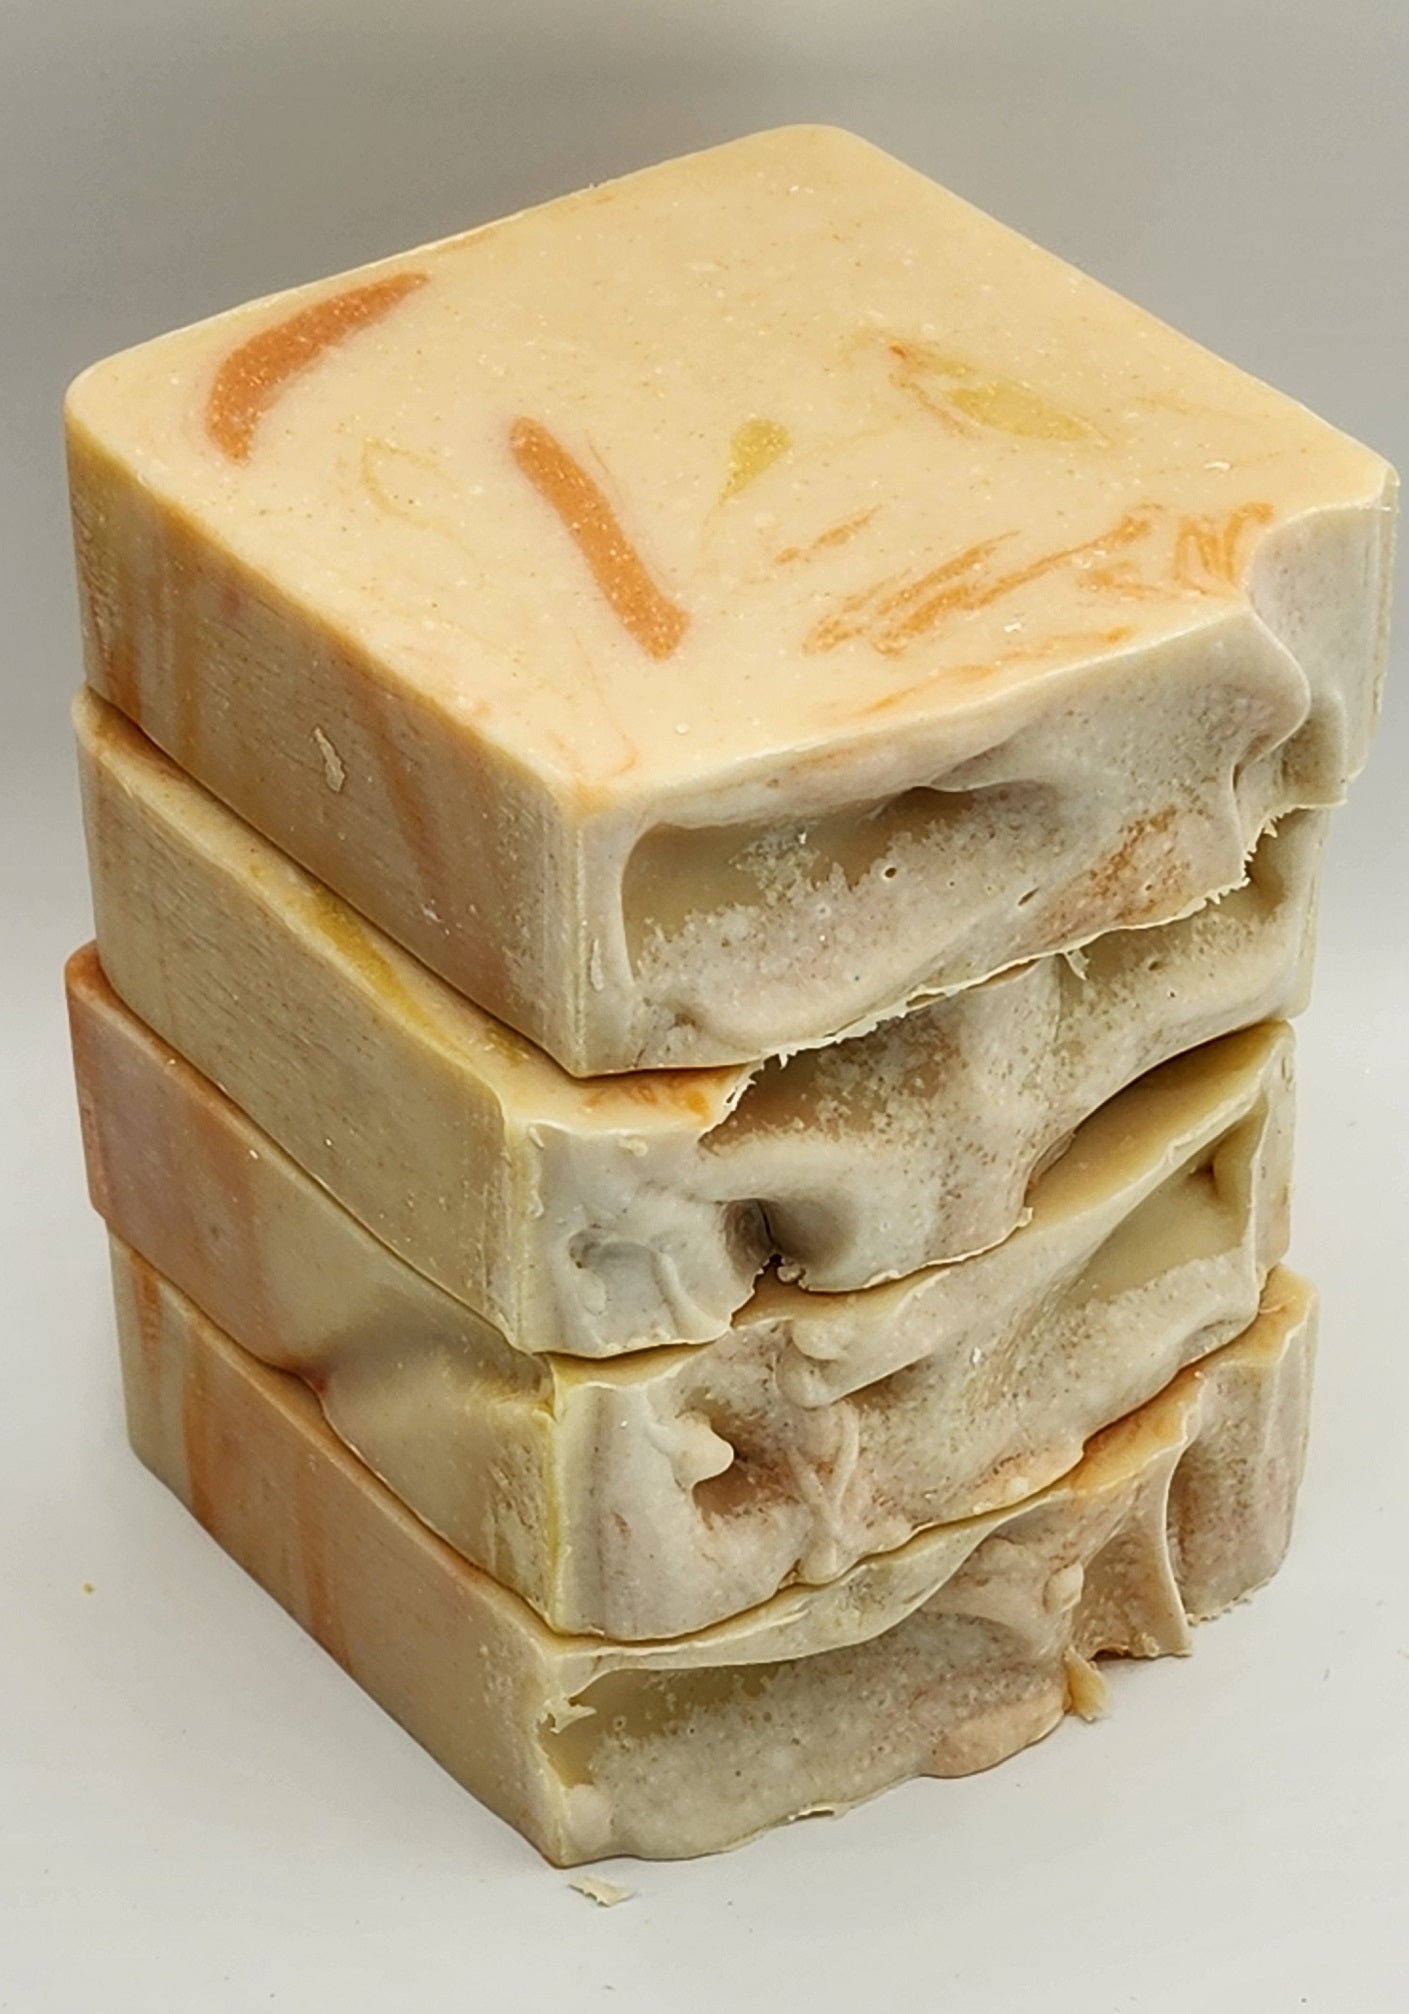 BLOOMING ORANGES /  Bar Soap / Gift Soap / Gift Idea / Handmade Soap / Cold Process GOAT'S Milk Soap / Yogurt / Honey / Oatmeal  Soap